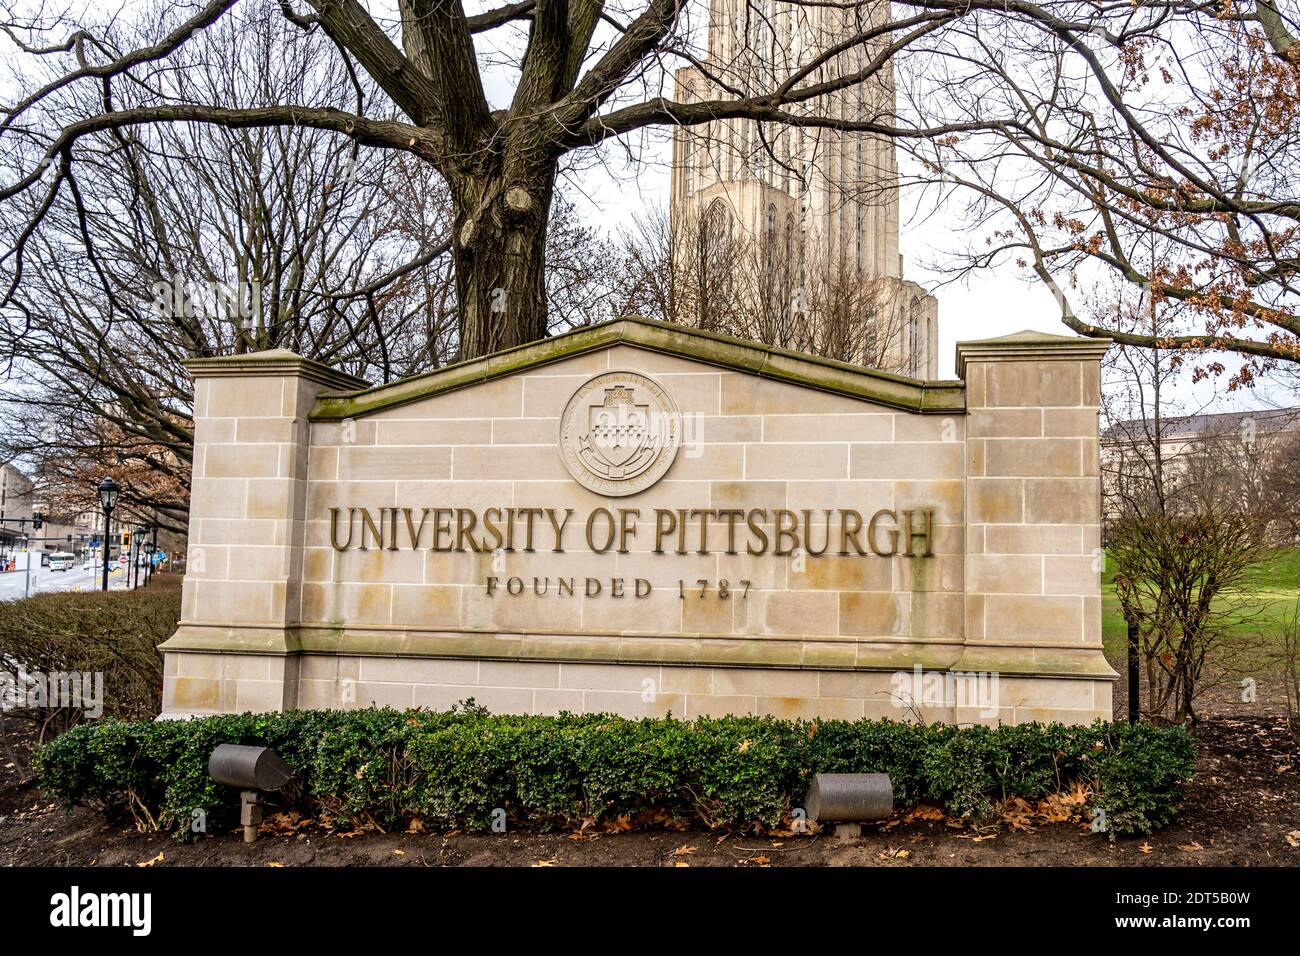 Pittsburgh, Pennsylvania, USA - 11. Januar 2020: Unterschrift der University of Pittsburgh (Pitt); Pitt ist eine öffentliche Forschungsuniversität. Stockfoto